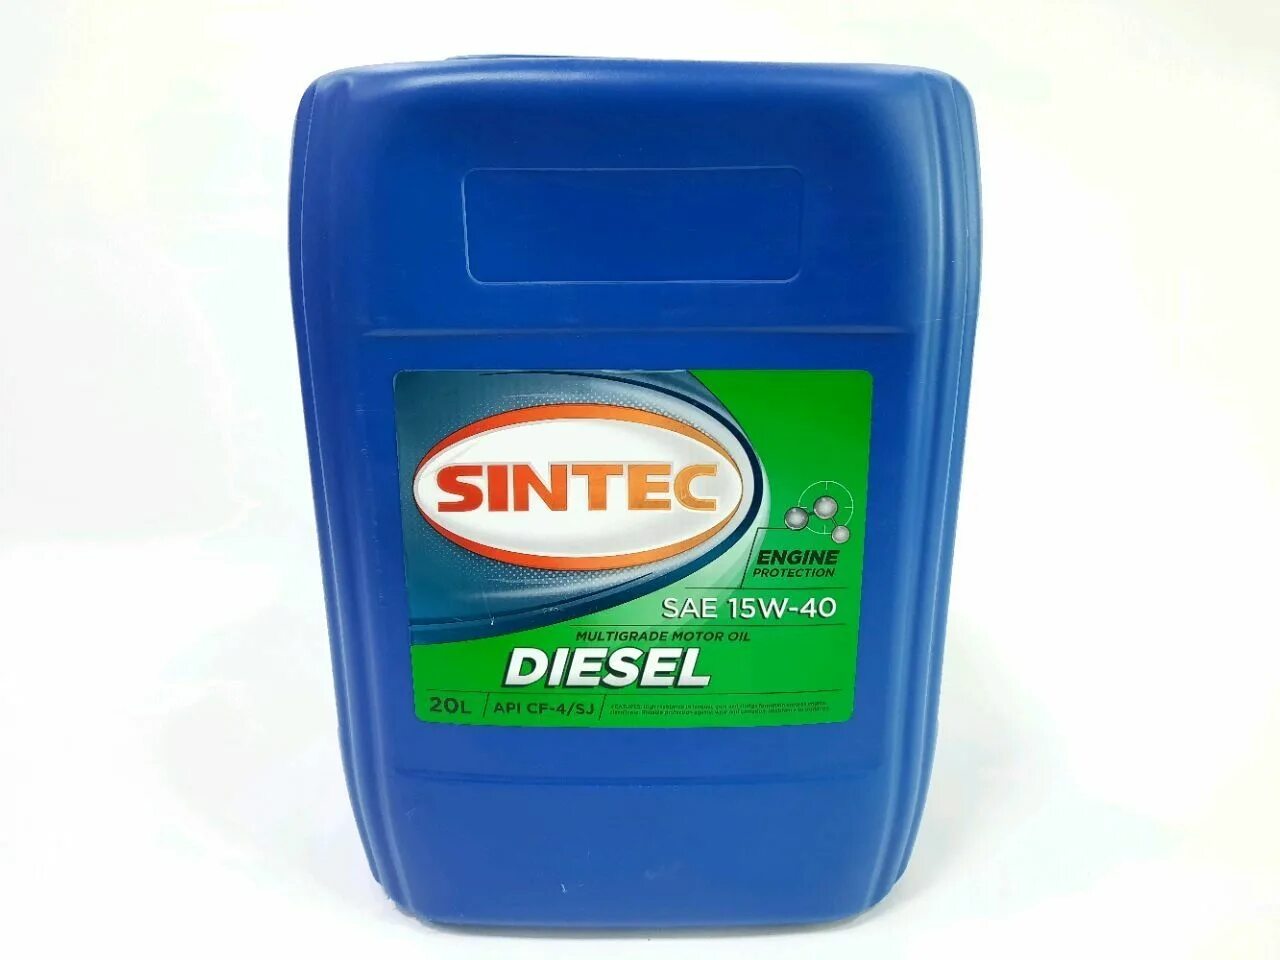 Sintec CF-4 15w-40 20л. Sintec 15w-40 Diesel. Sintec Diesel SAE 15w-40 API CF-4/SJ 20л. Sintec 15w40 Diesel артикул. Масло 15 w